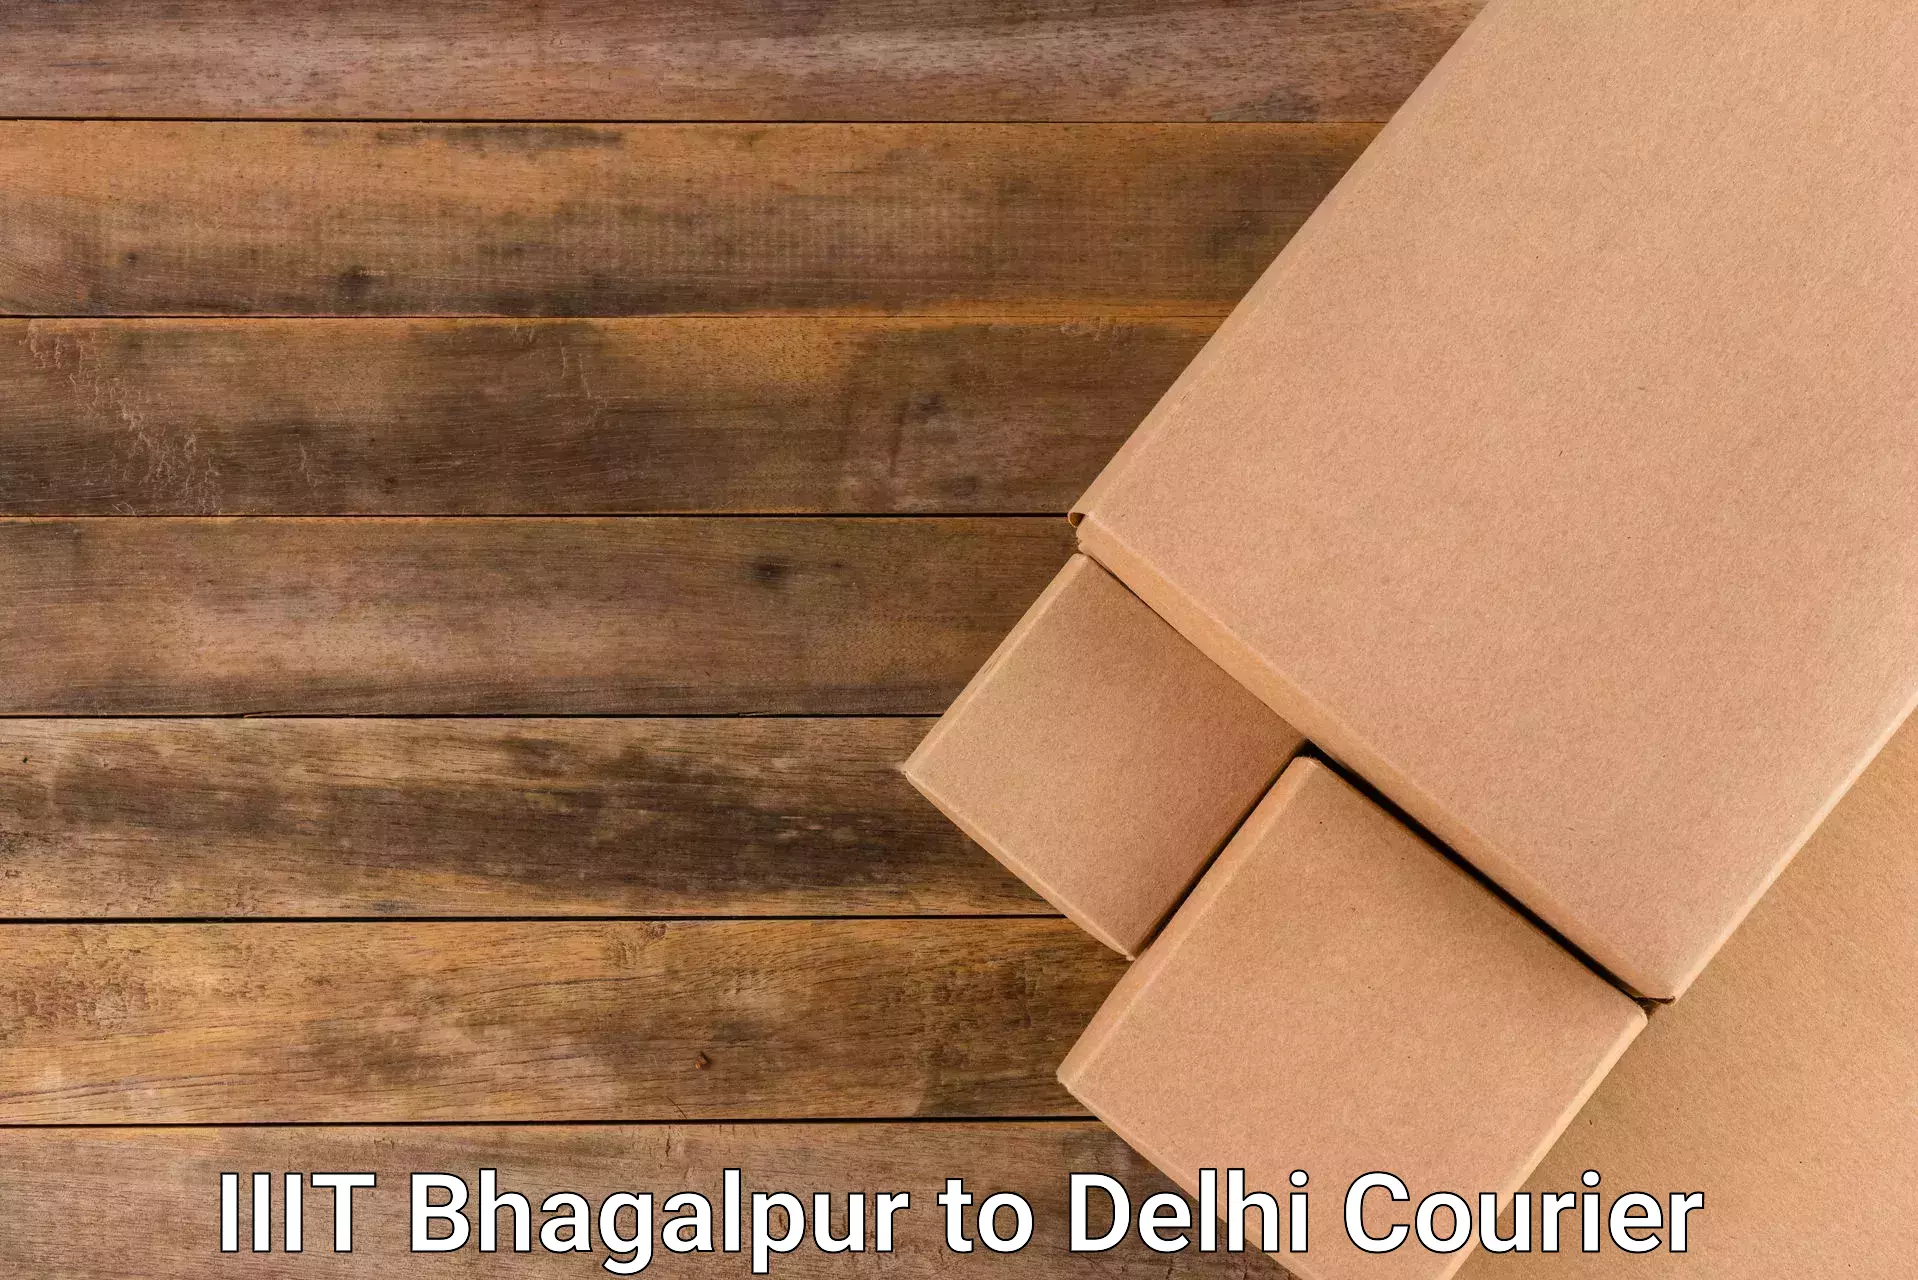 Budget-friendly shipping IIIT Bhagalpur to University of Delhi